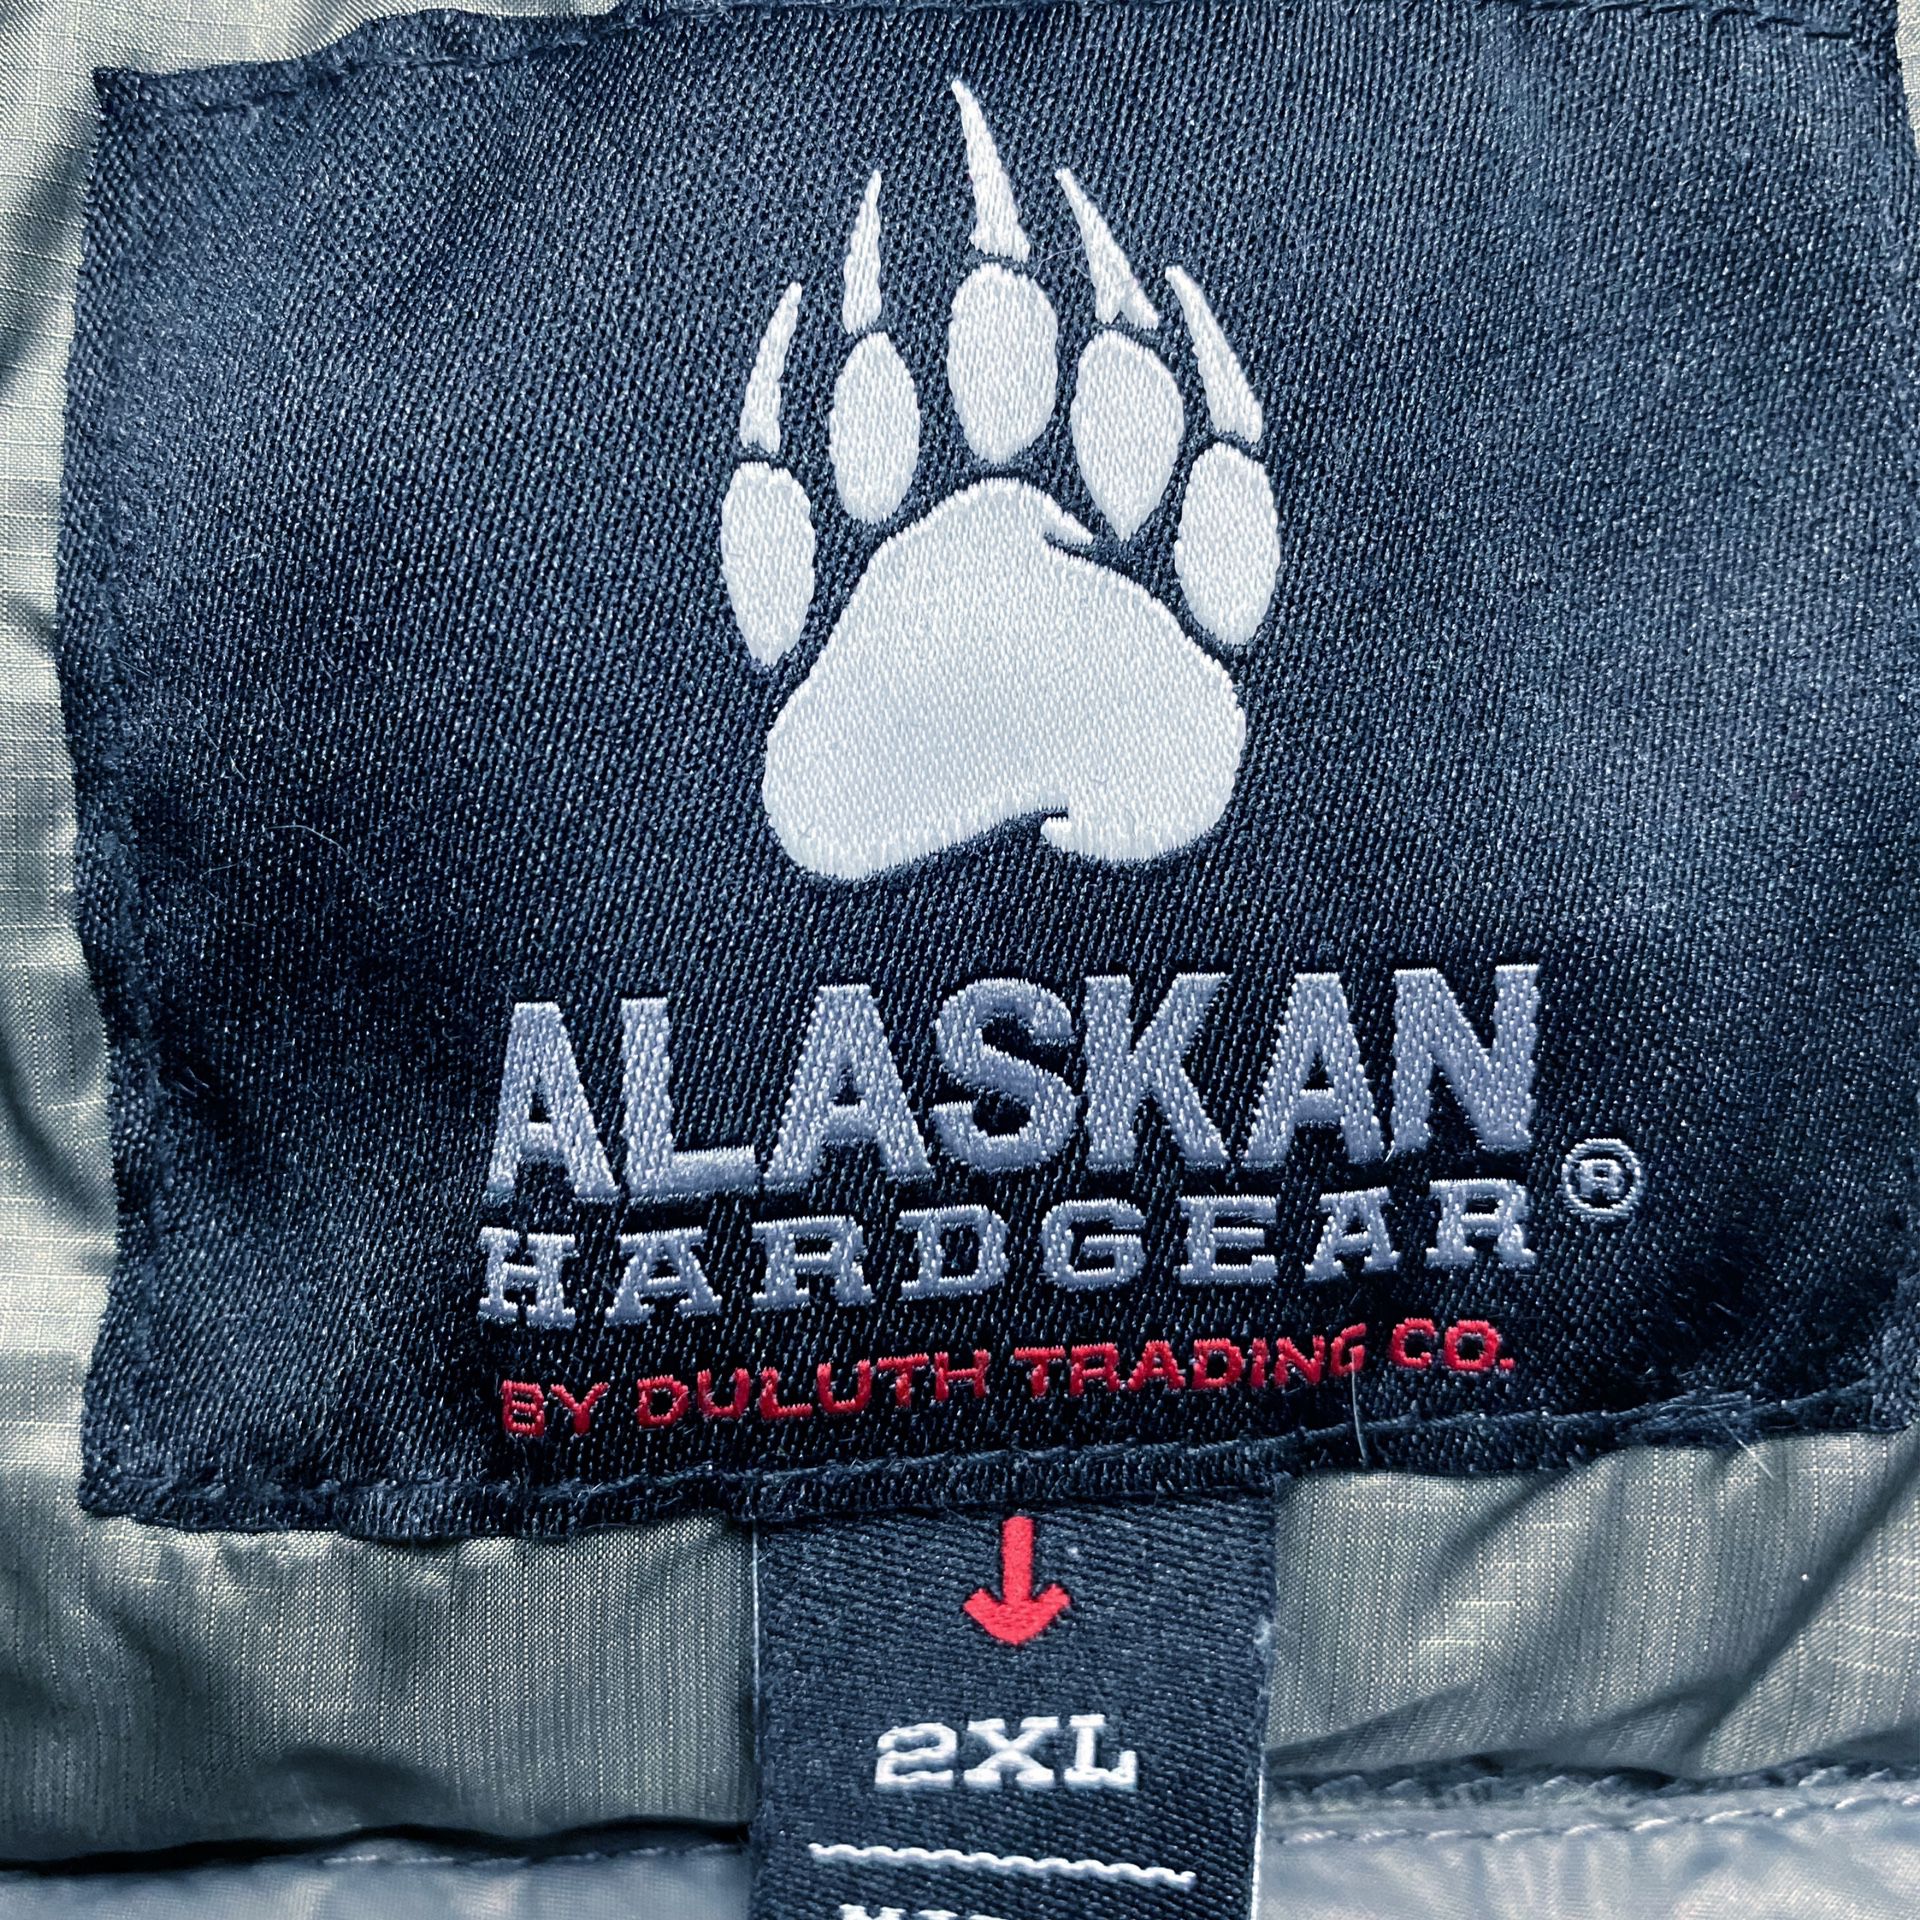 Alaskan Hardgear x Duluth Trading Co. Gray Puffer Jacket for Sale